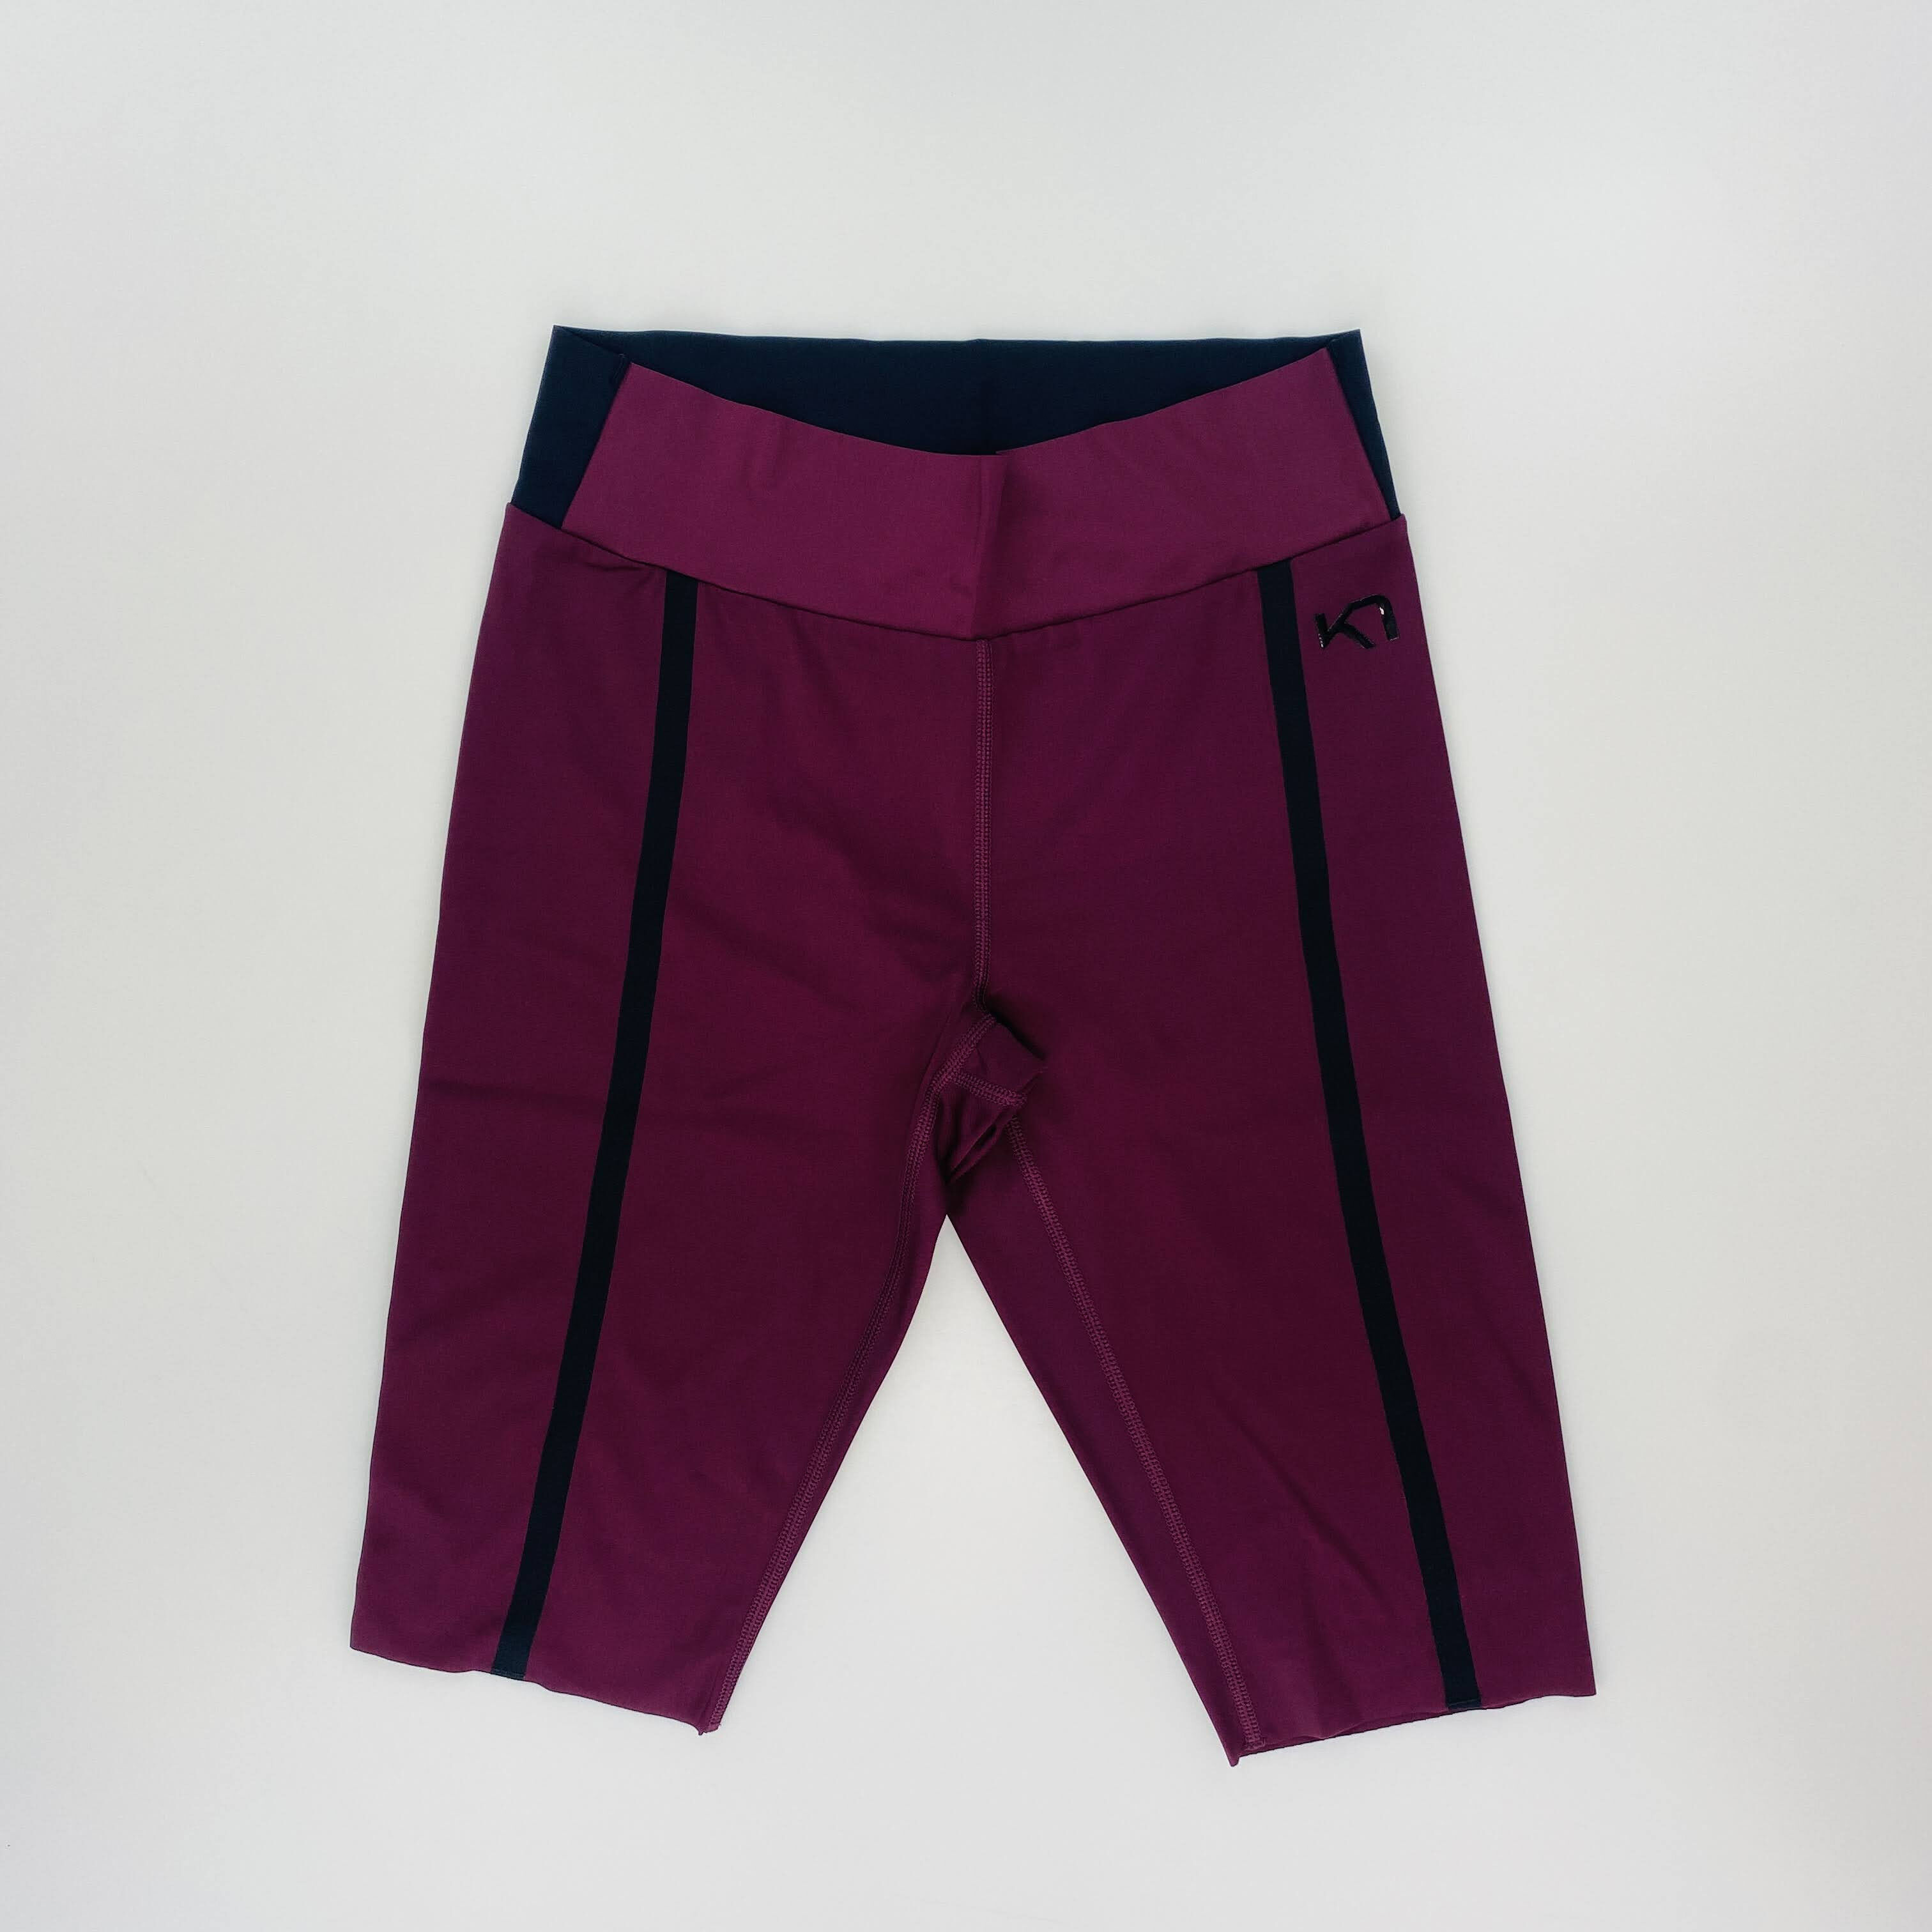 Kari Traa Sigrun L Shorts - Segunda Mano Pantalones cortos - Mujer - Violeta - M | Hardloop